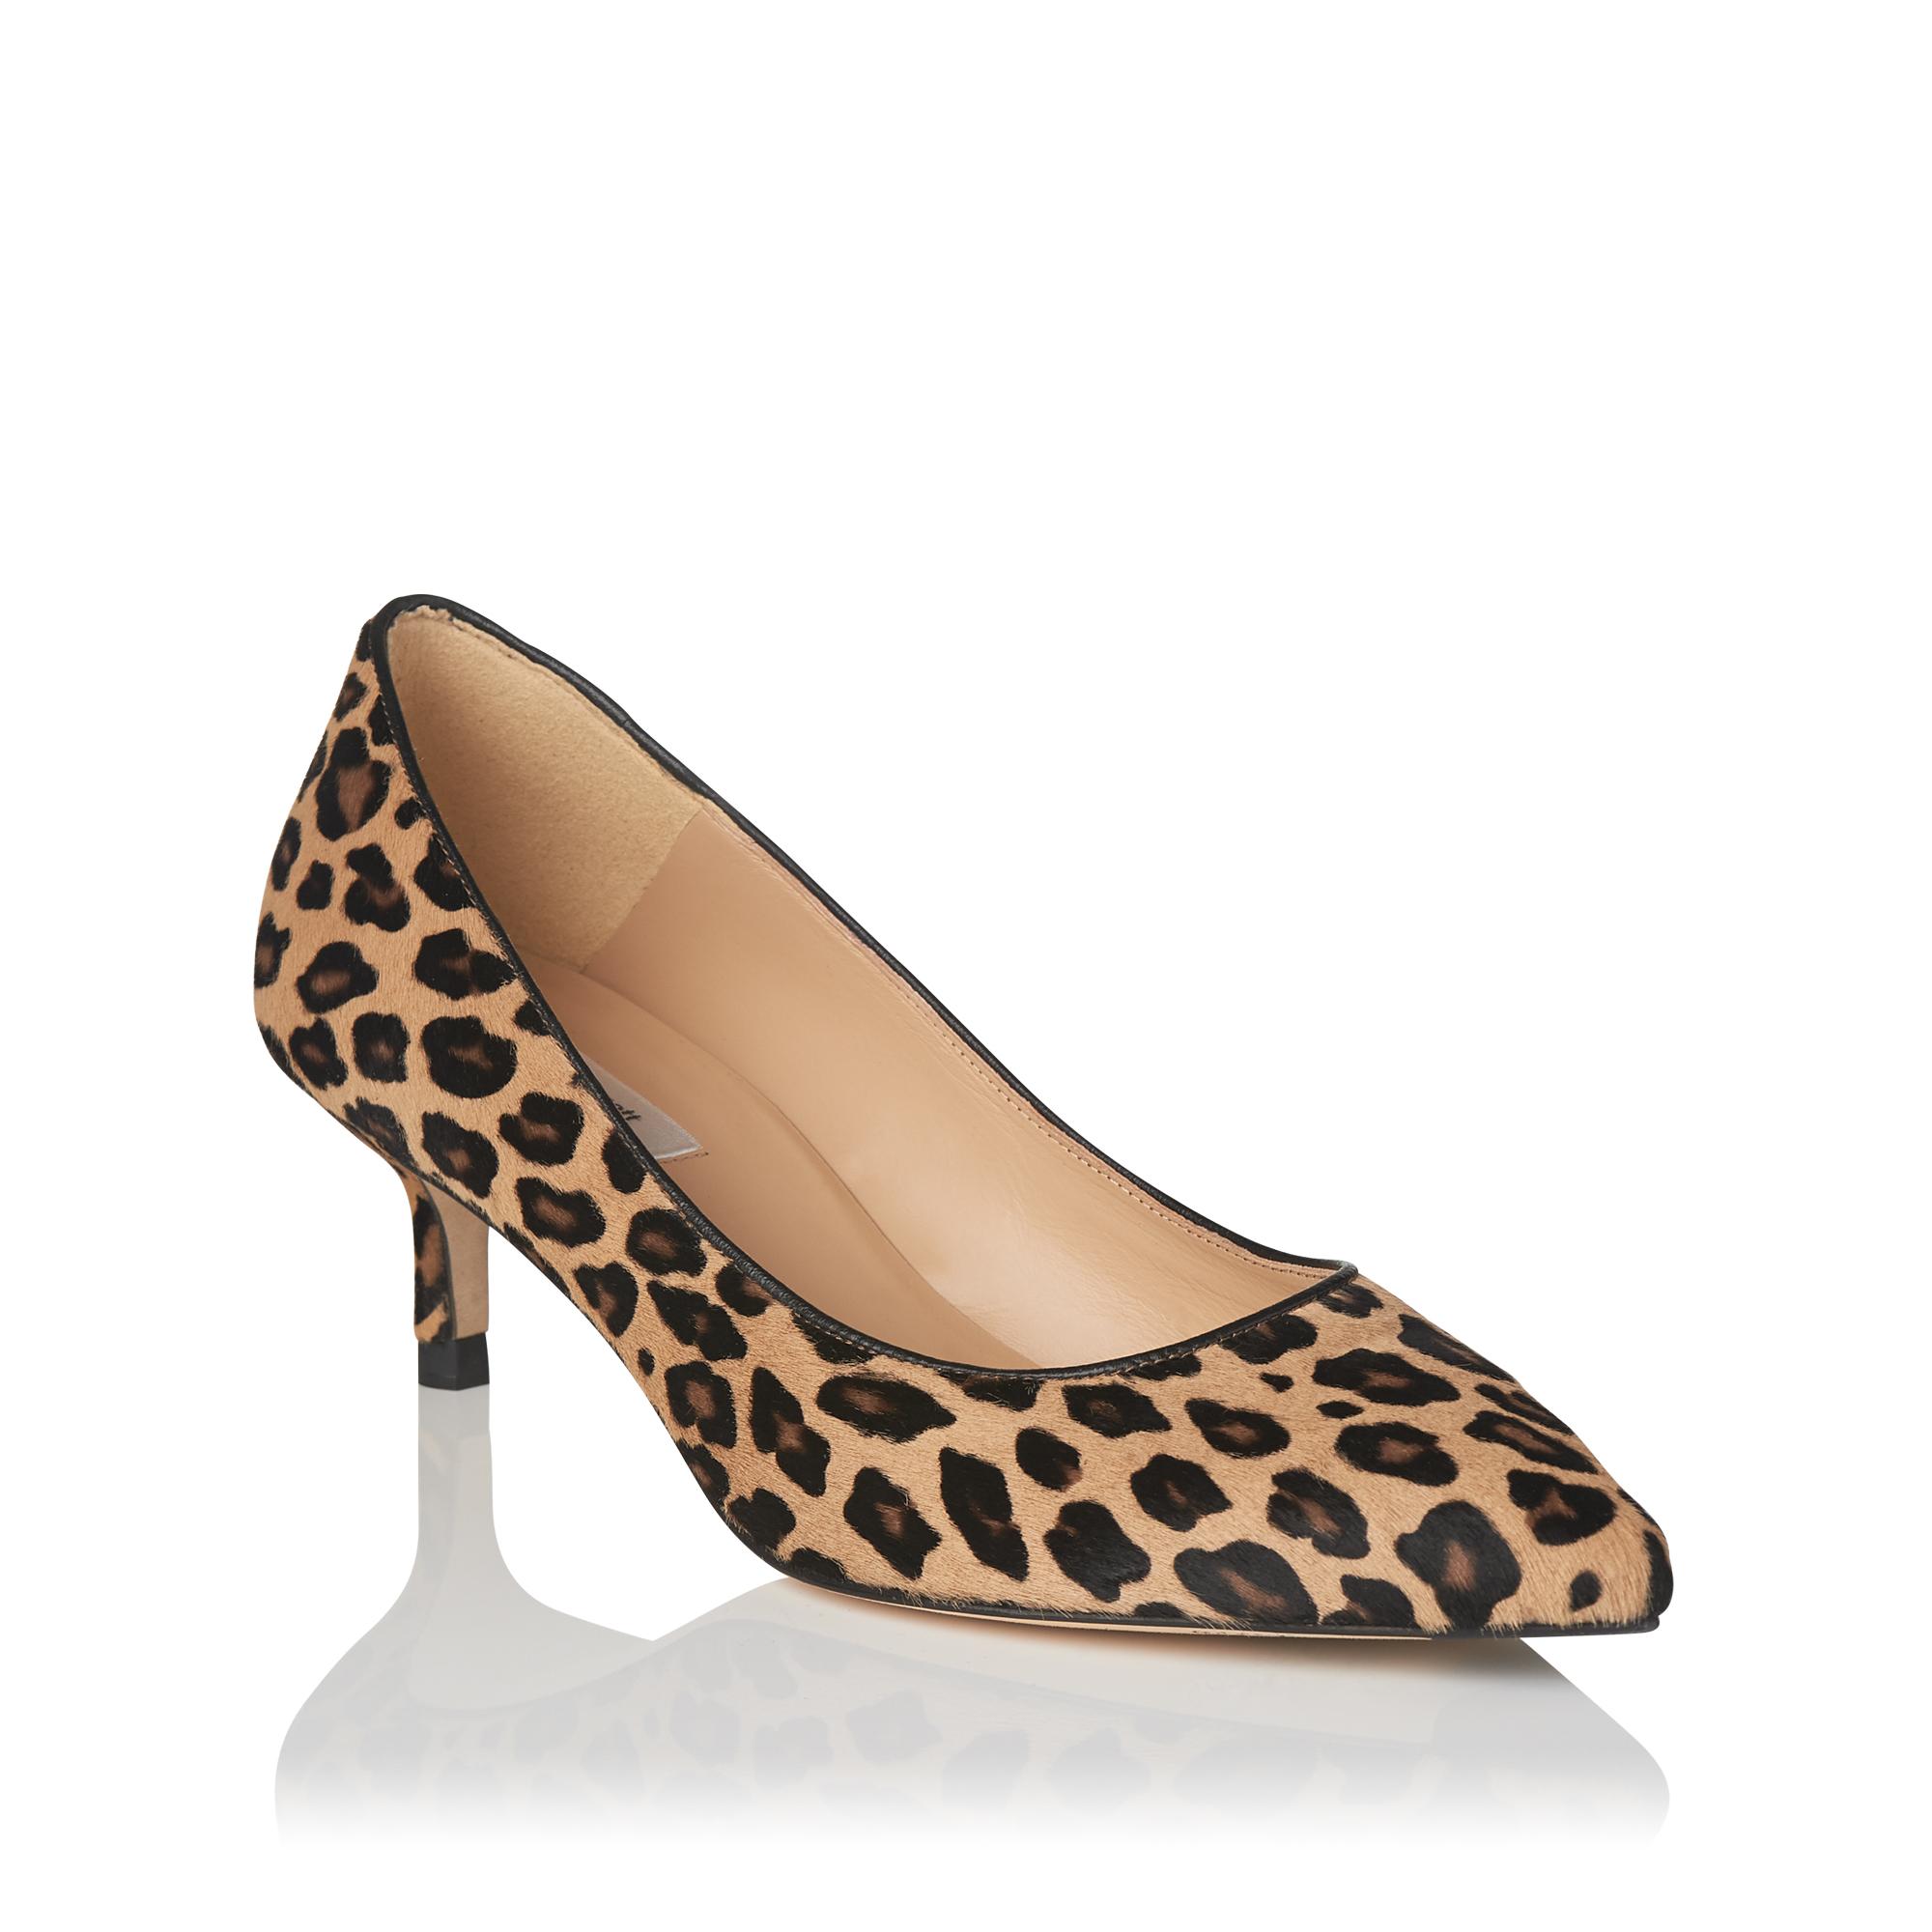 leopard print court shoes low heel